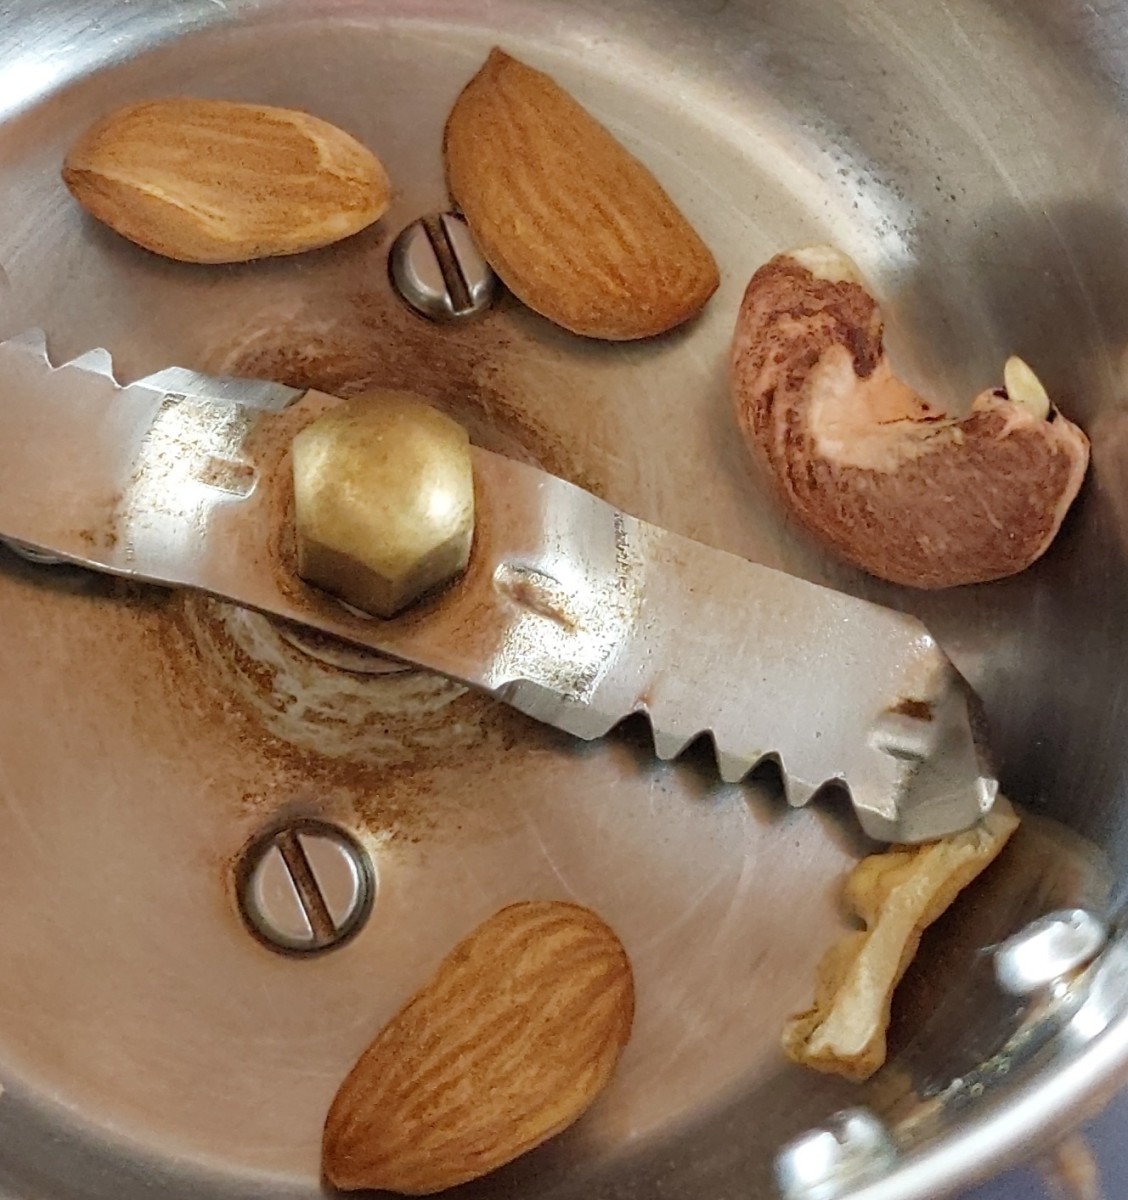 In a mixer jar, add 2-3 almonds, 1-2 cashews and 1/2 walnut.